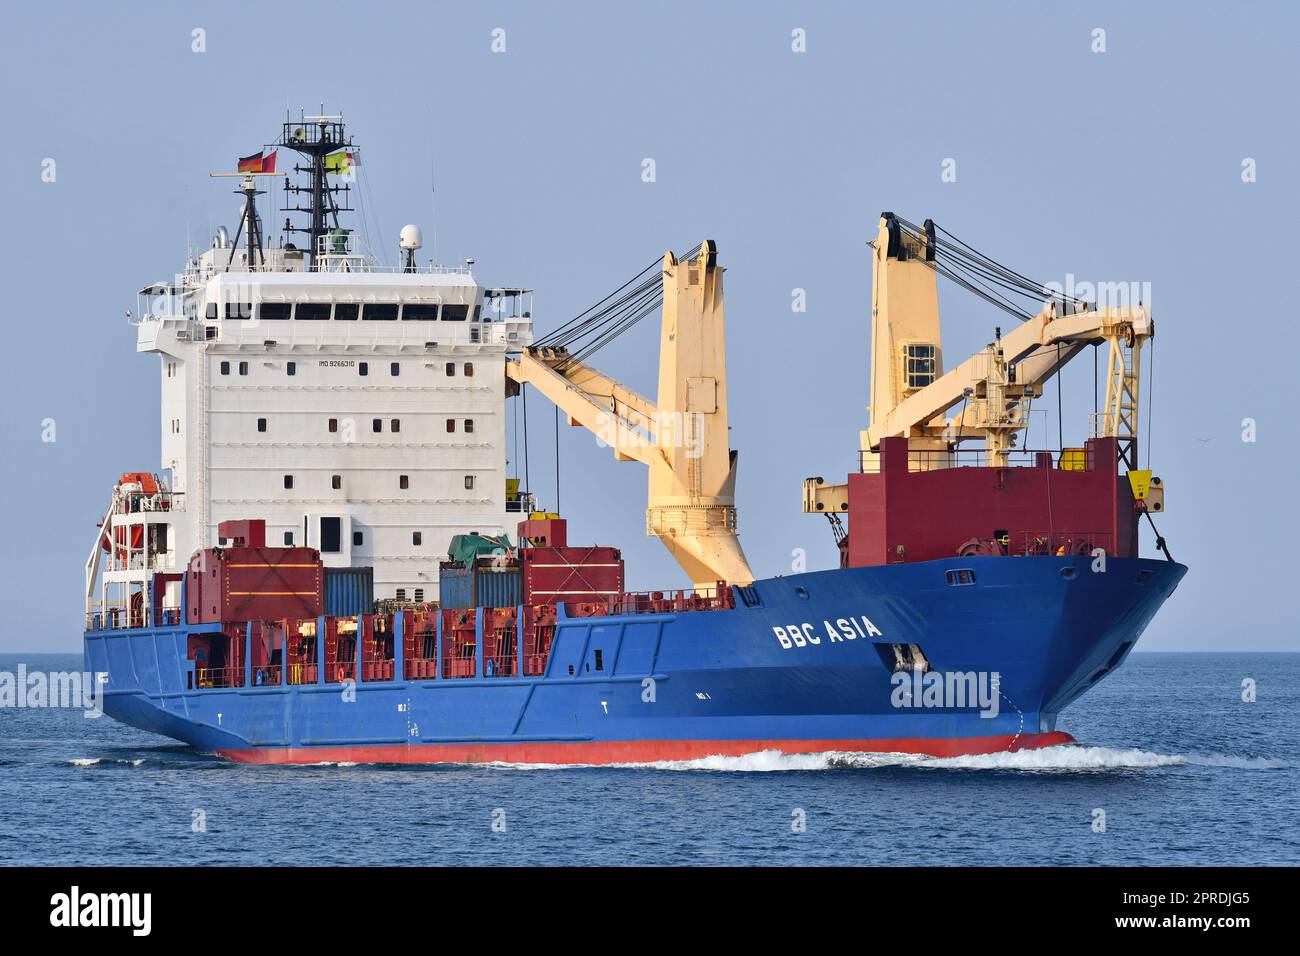 General Cargo Ship BBC ASIA at the Kiel Fjord Stock Photo